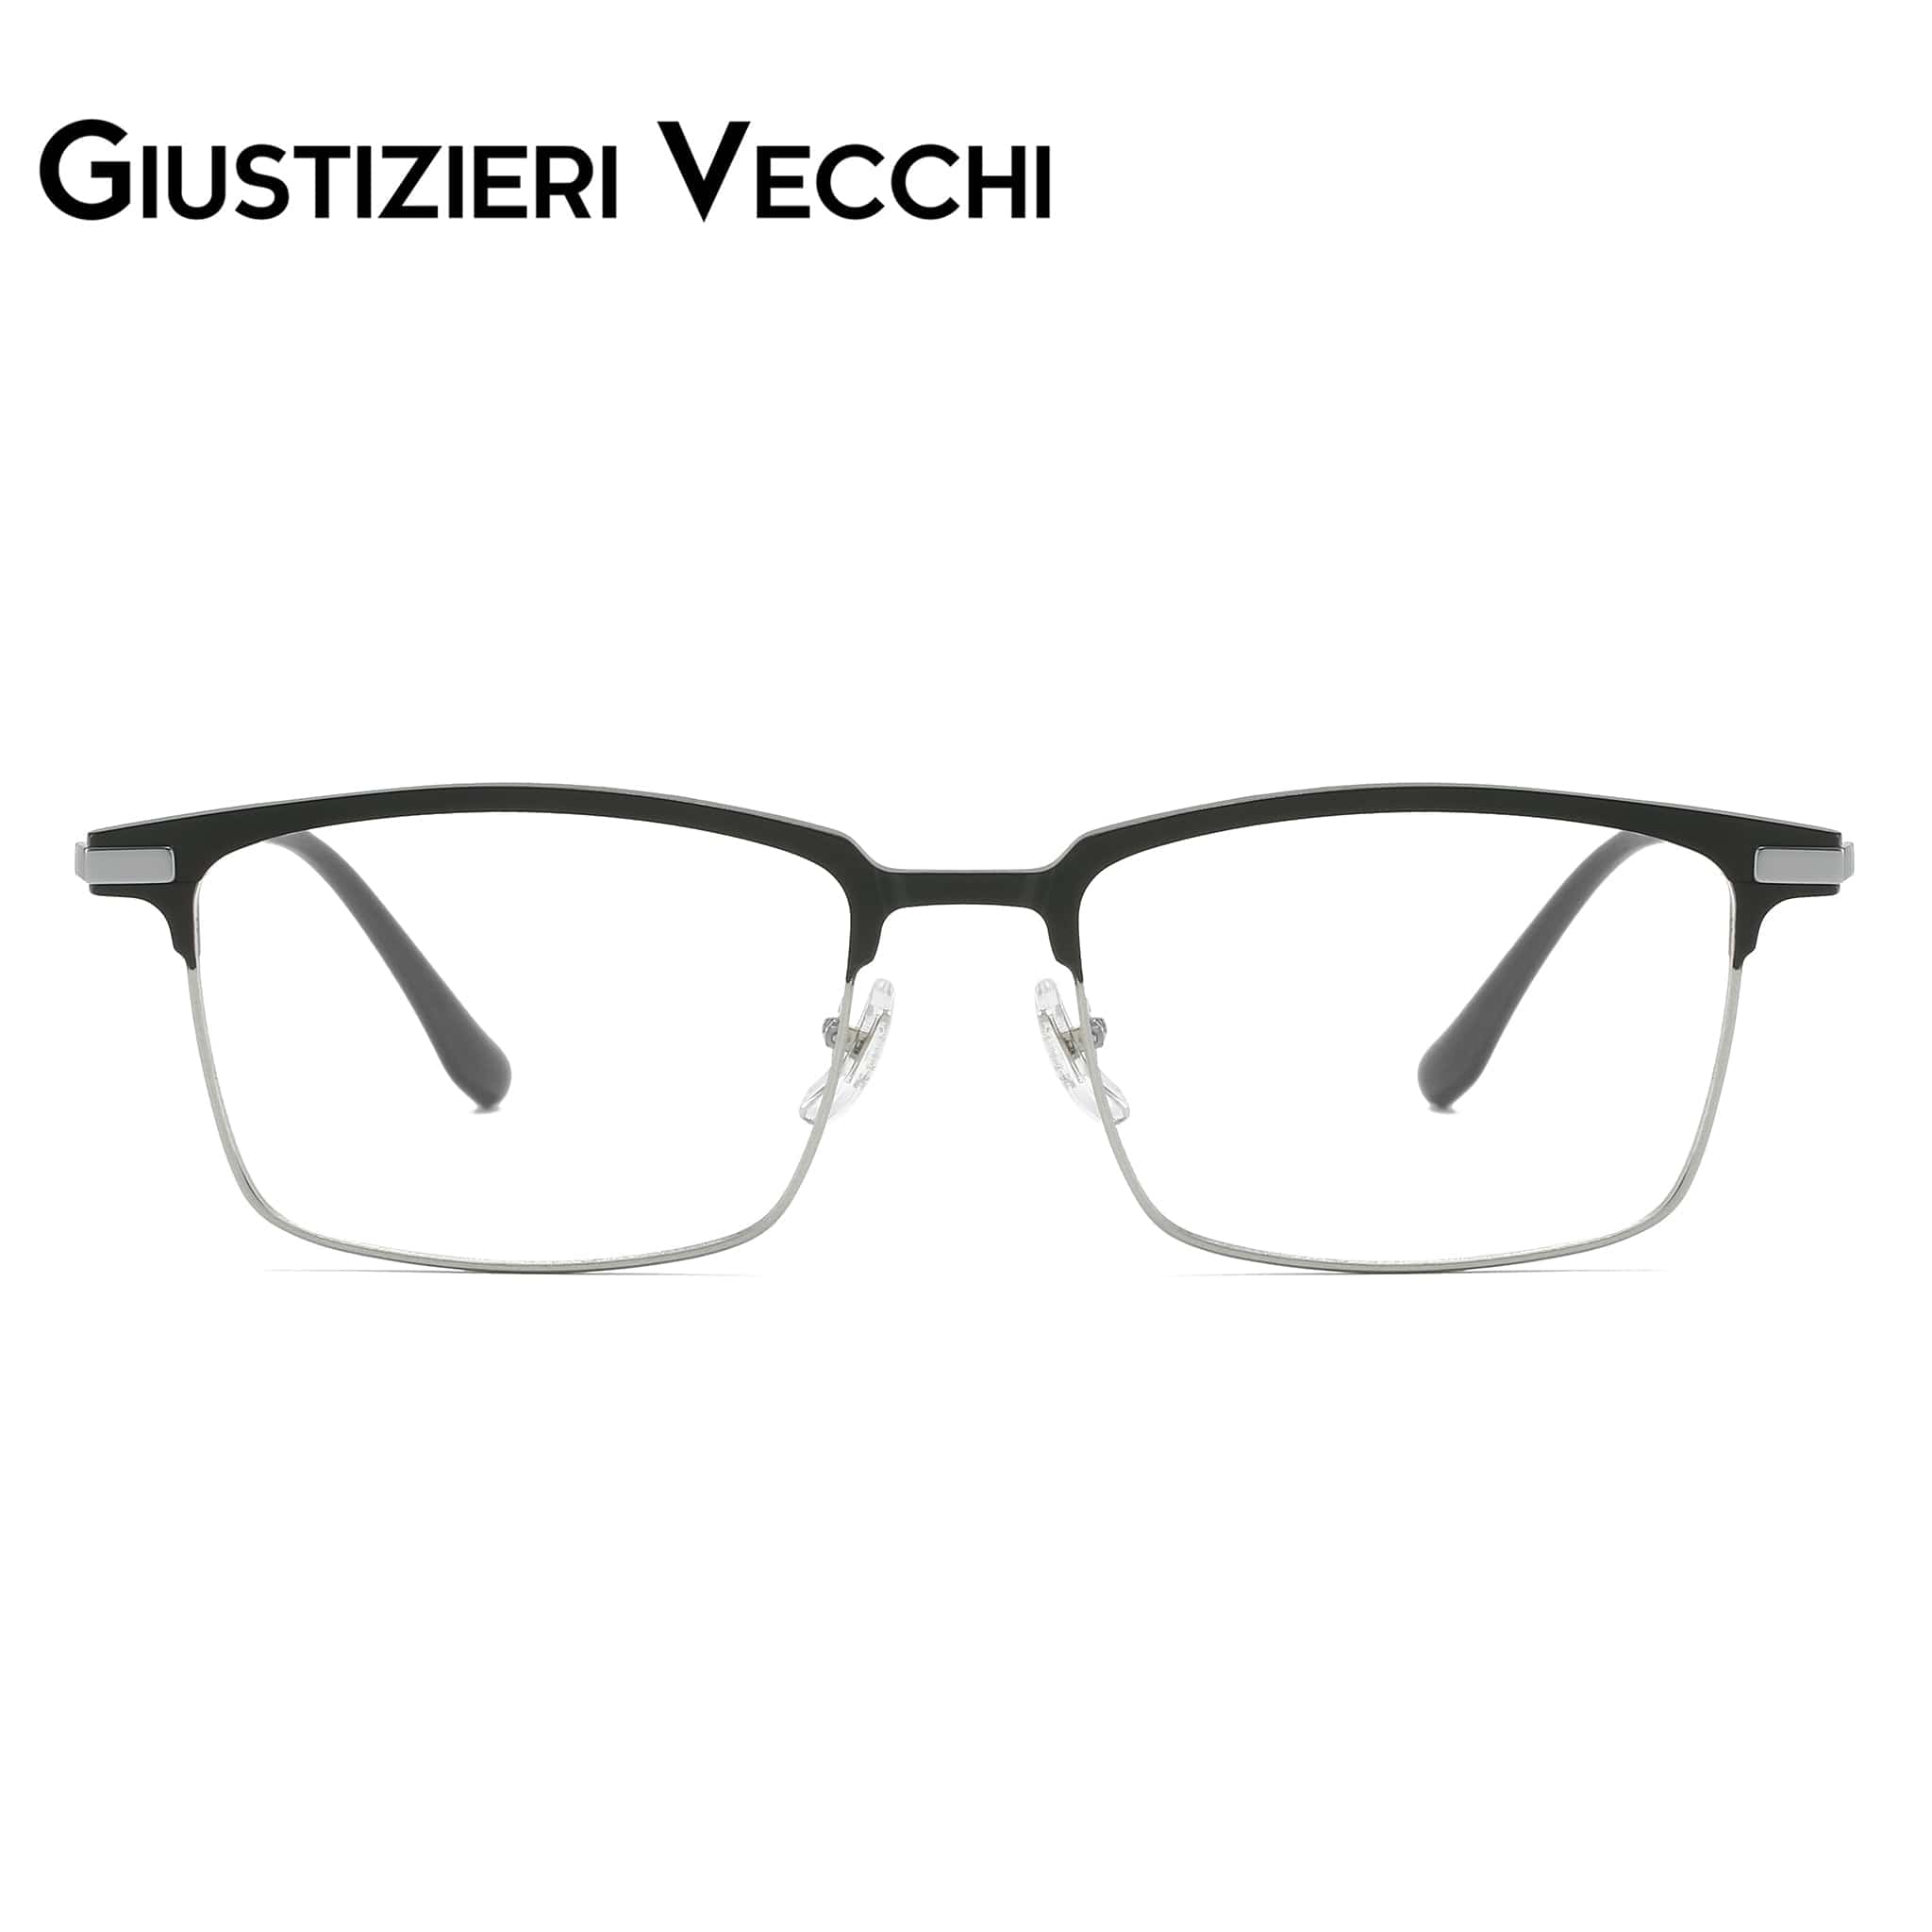 GIUSTIZIERI VECCHI Eyeglasses Medium / Black with Silver AuroraBloom Duo